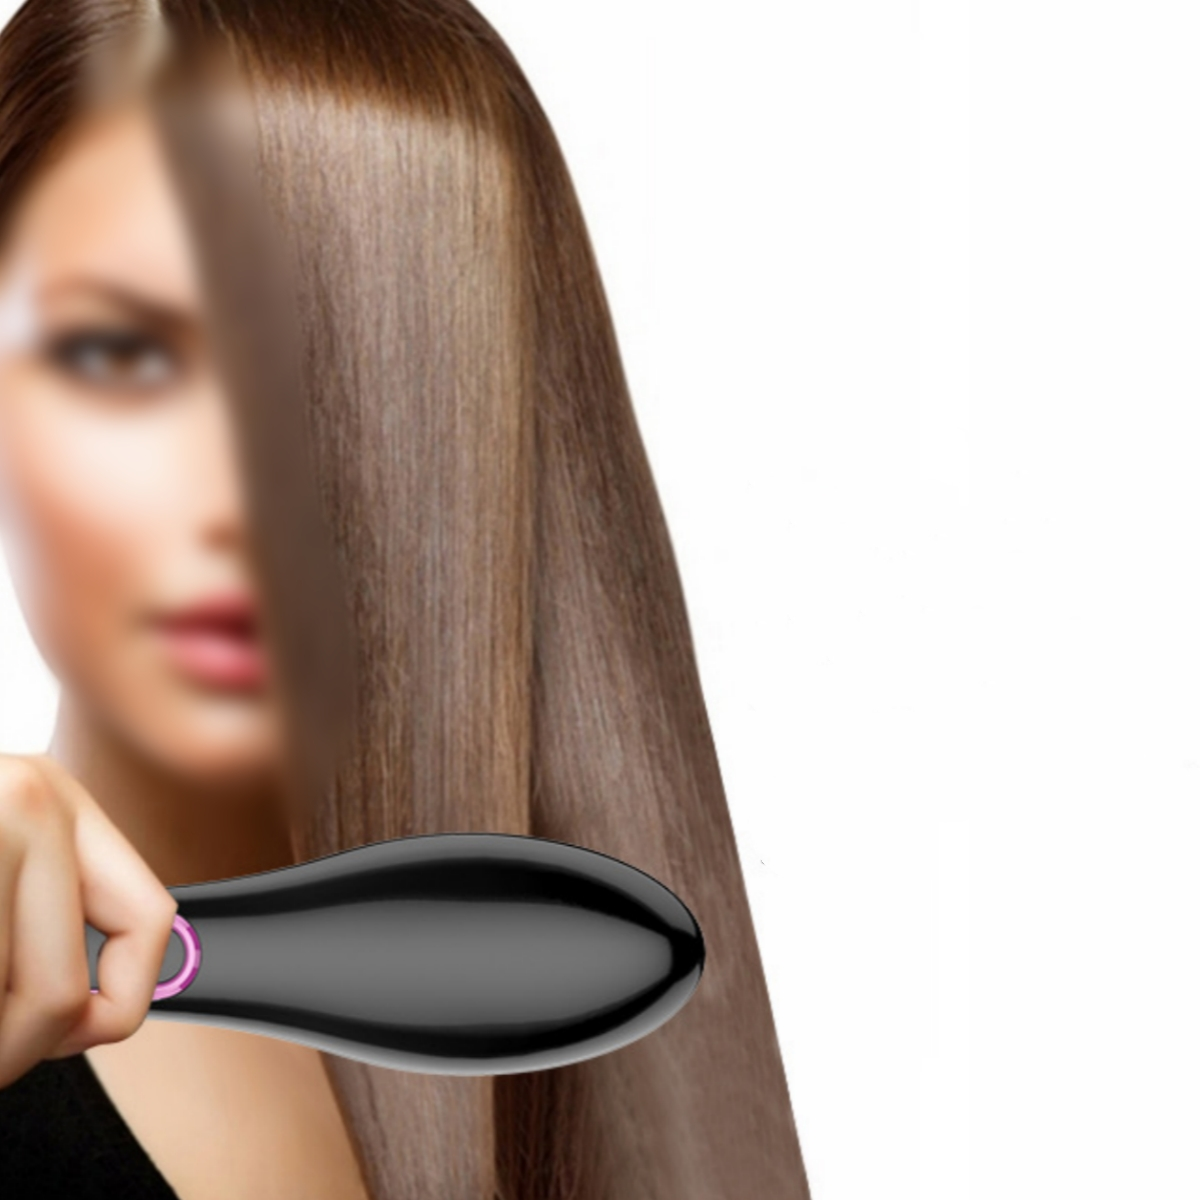 SYNTEK Haarglätter Lonen Elektrischer Haarglättungskamm, LCD-Display das Schädigen Negative Nicht, Haar